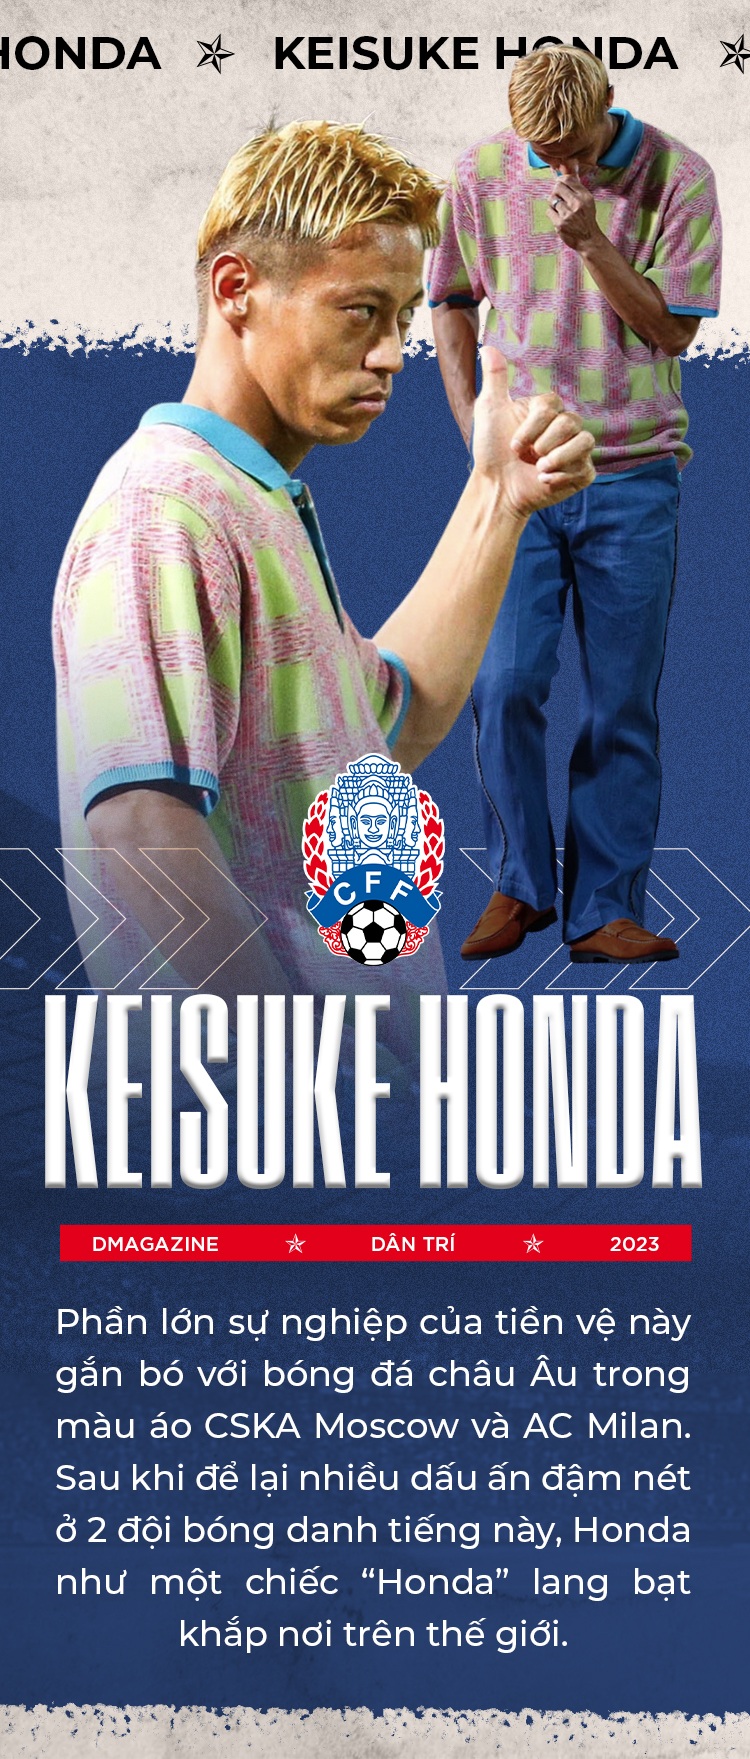 Keisuke Honda: 